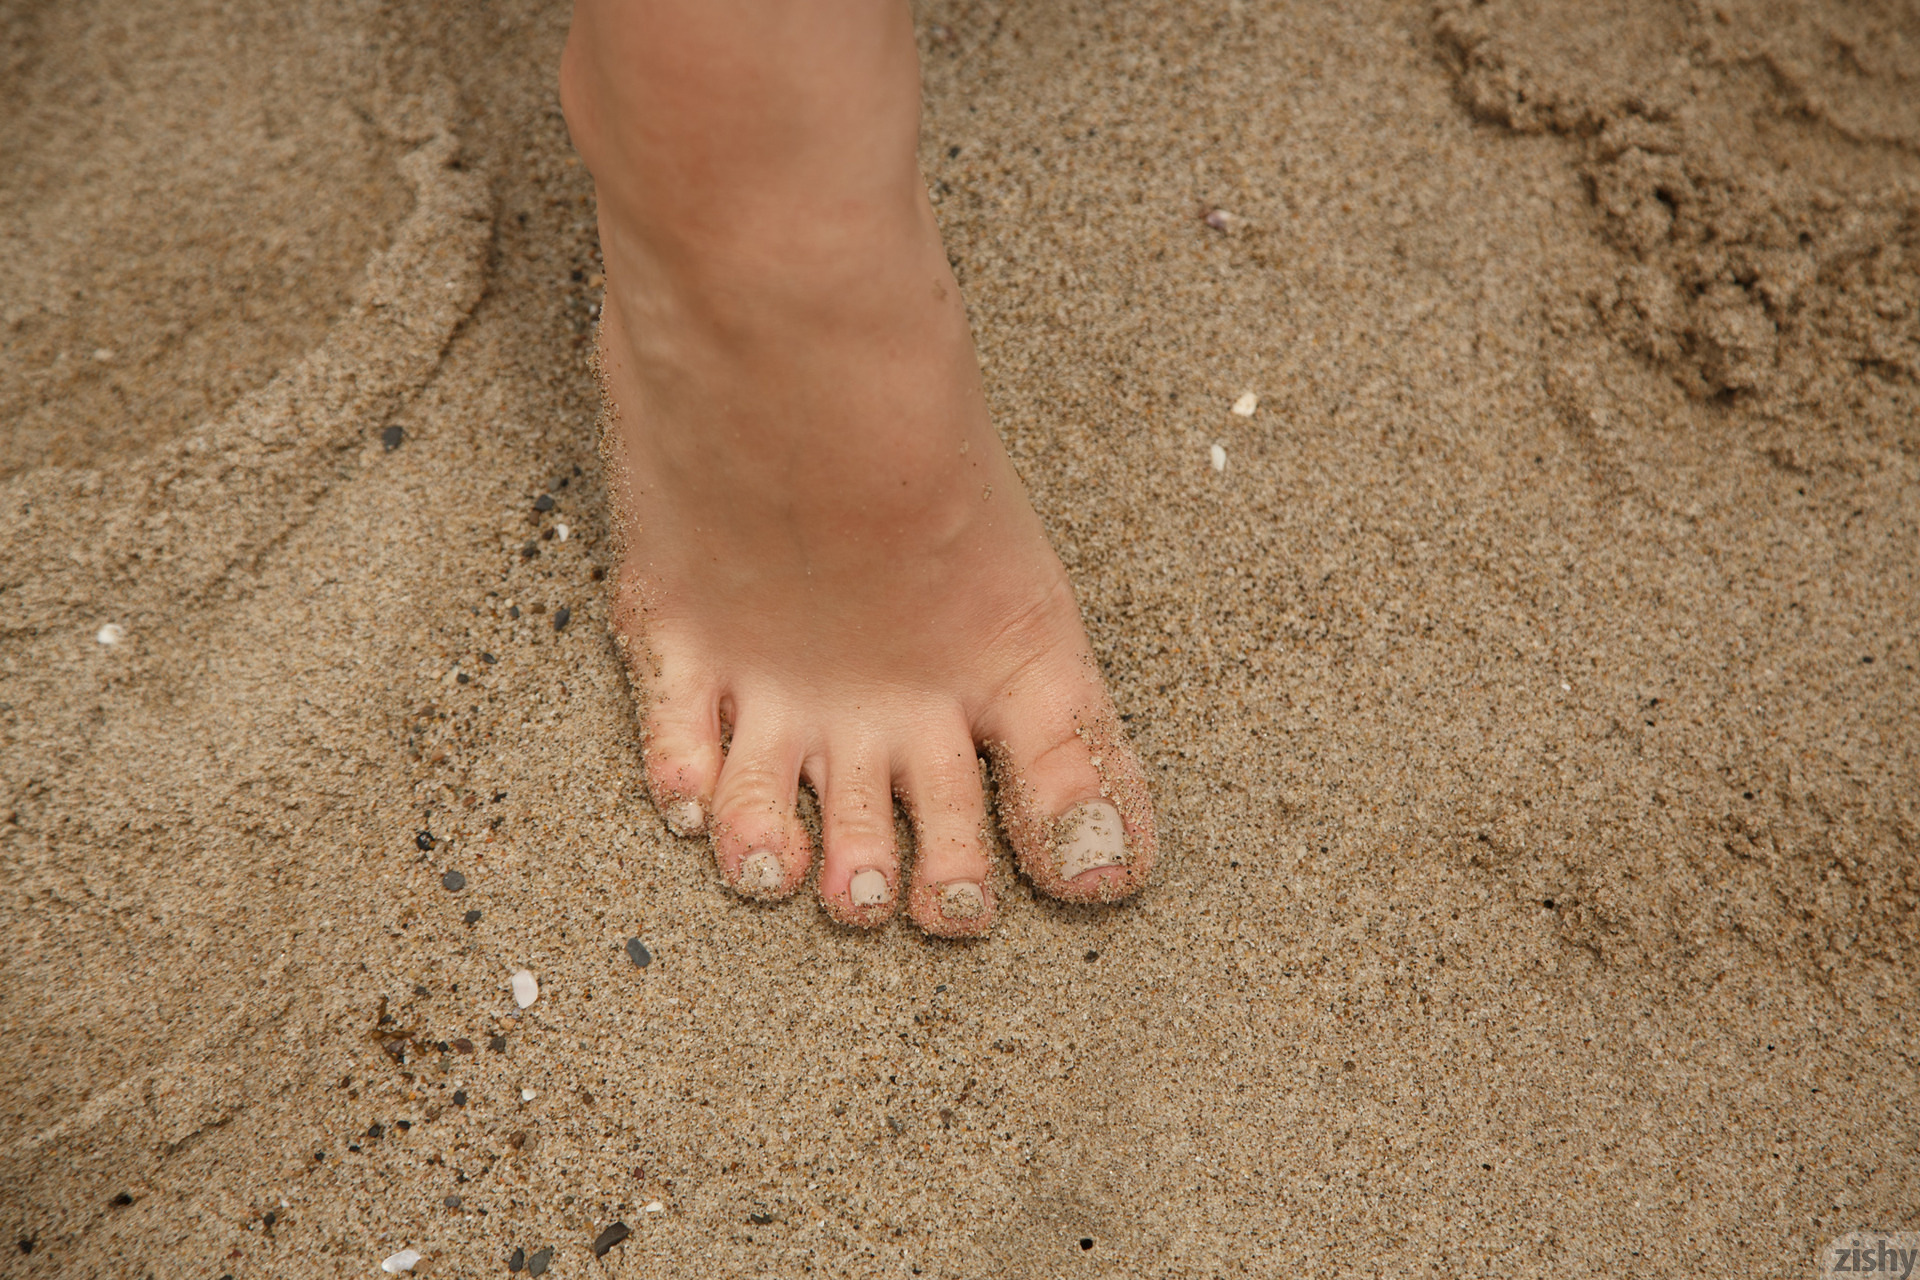 Lana Rhoades's Feet - I piedi di Lana Rhoades - Celebrities Feet - Hot 2023